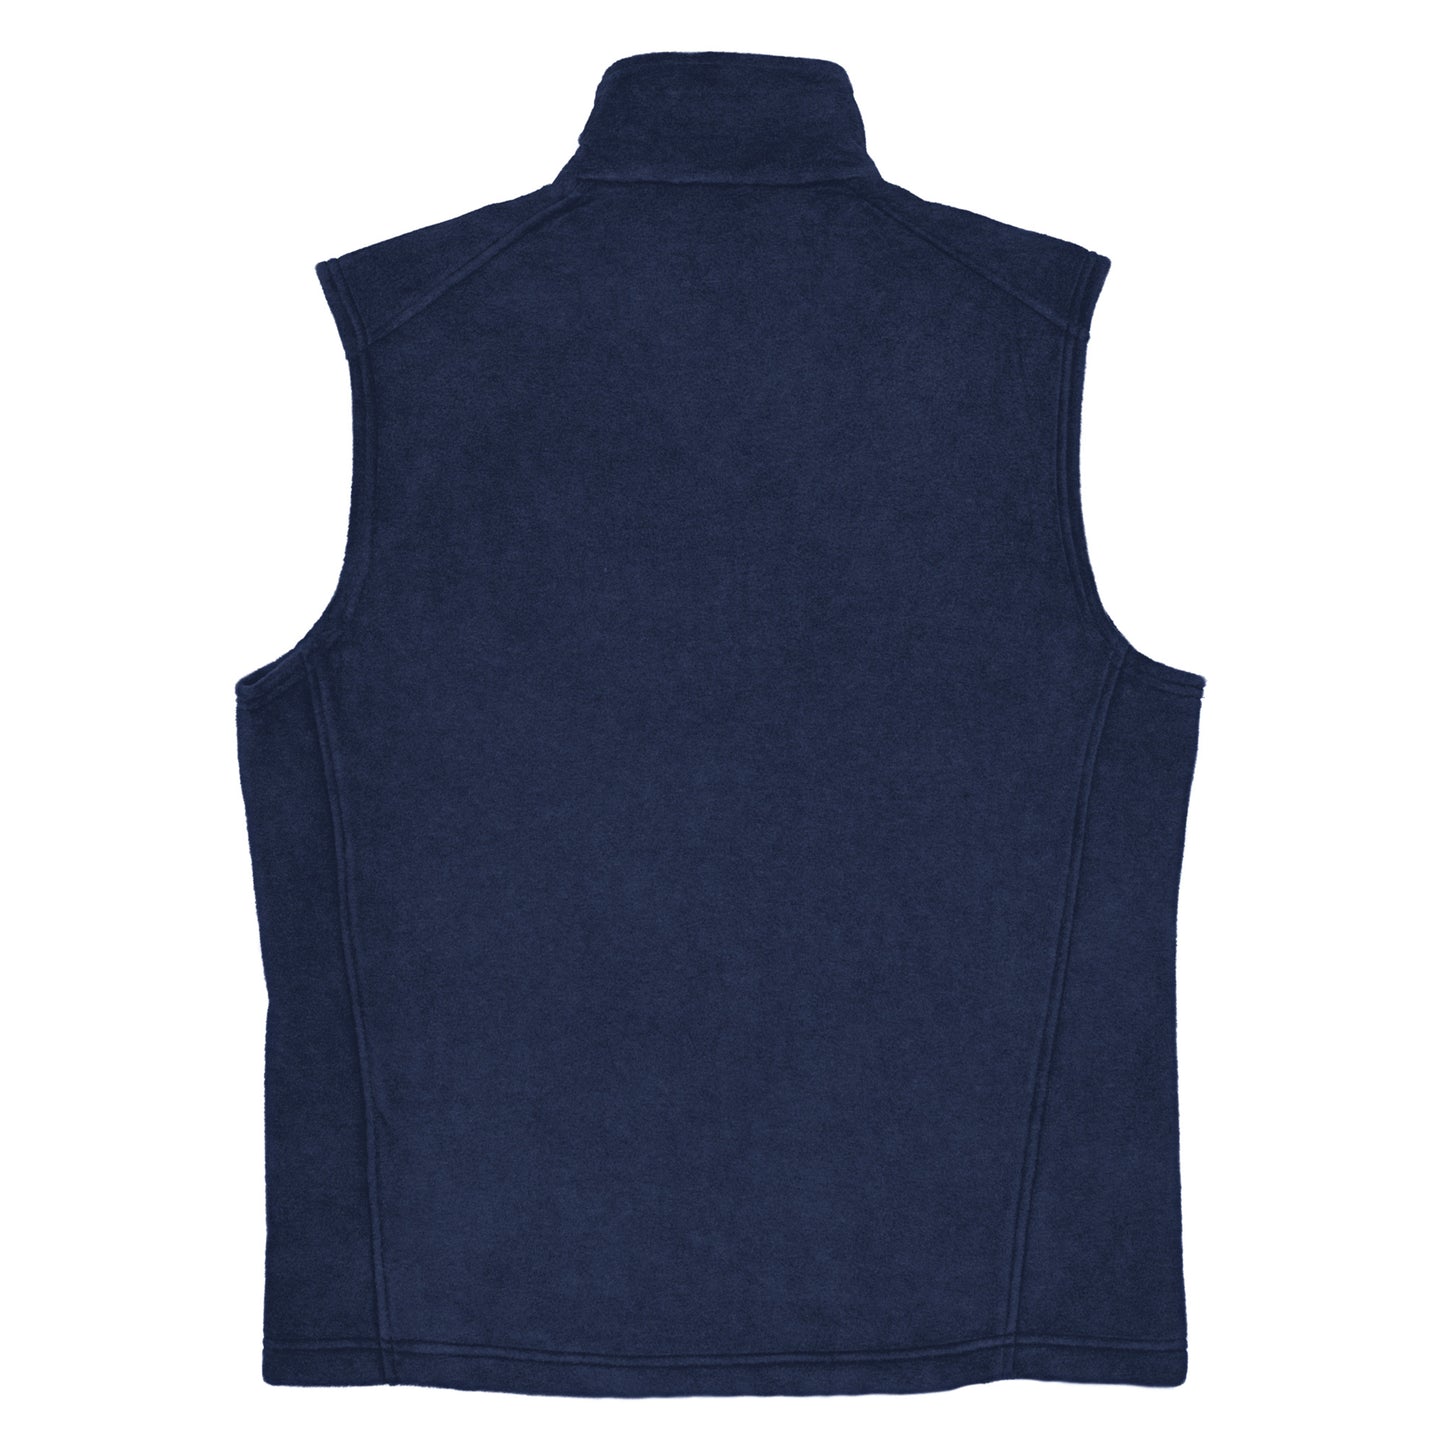 WFRN Embroidered Columbia fleece vest